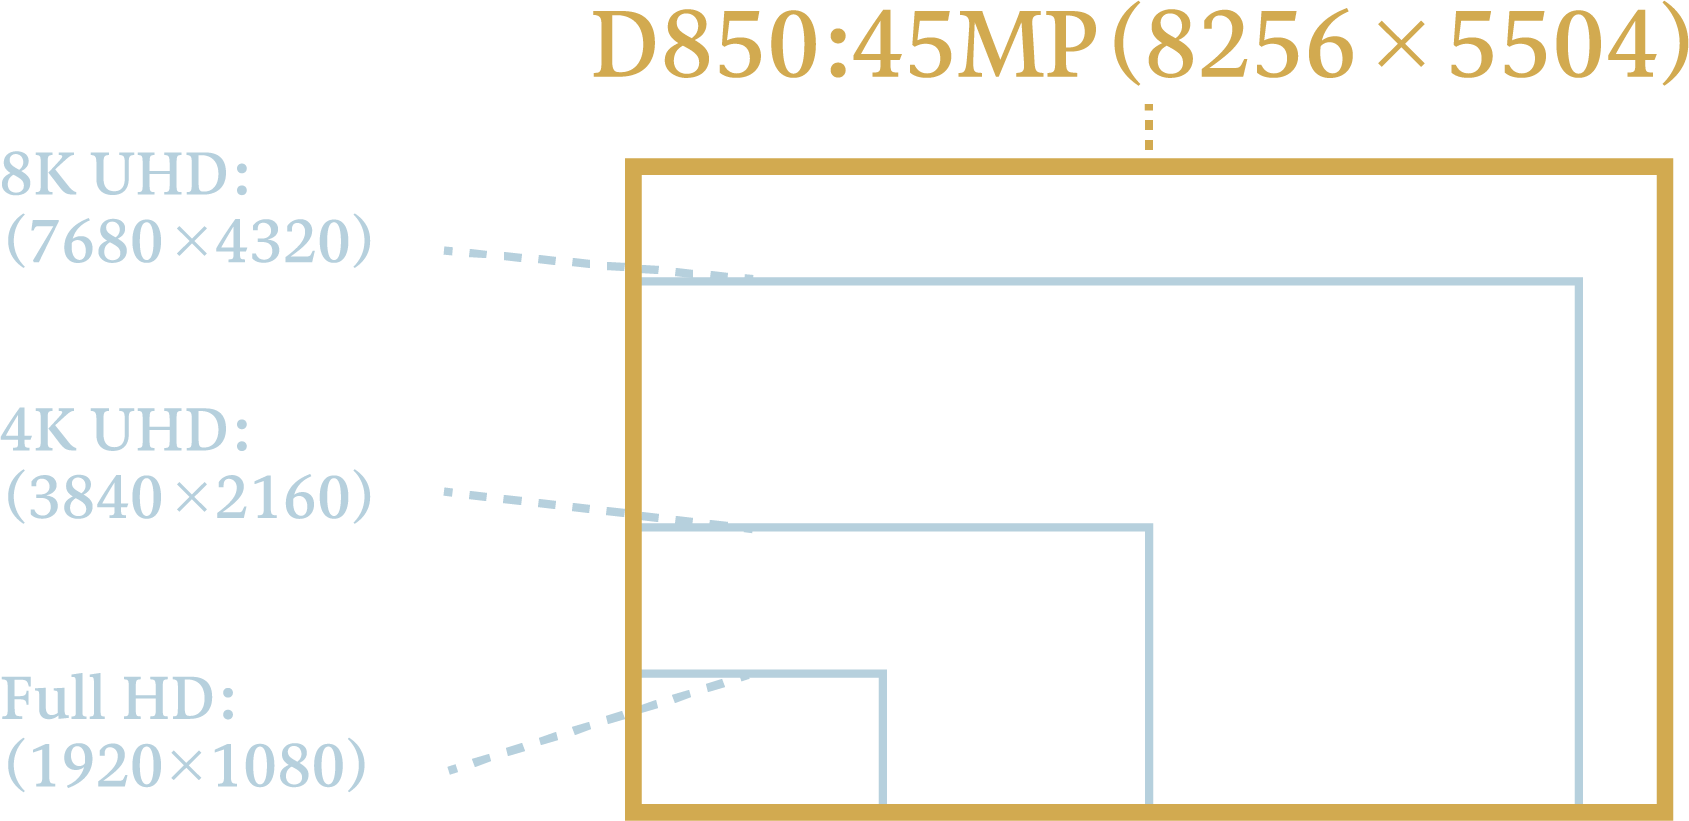 8Kタイムラプスムービー D850:45MP(8256×5504)